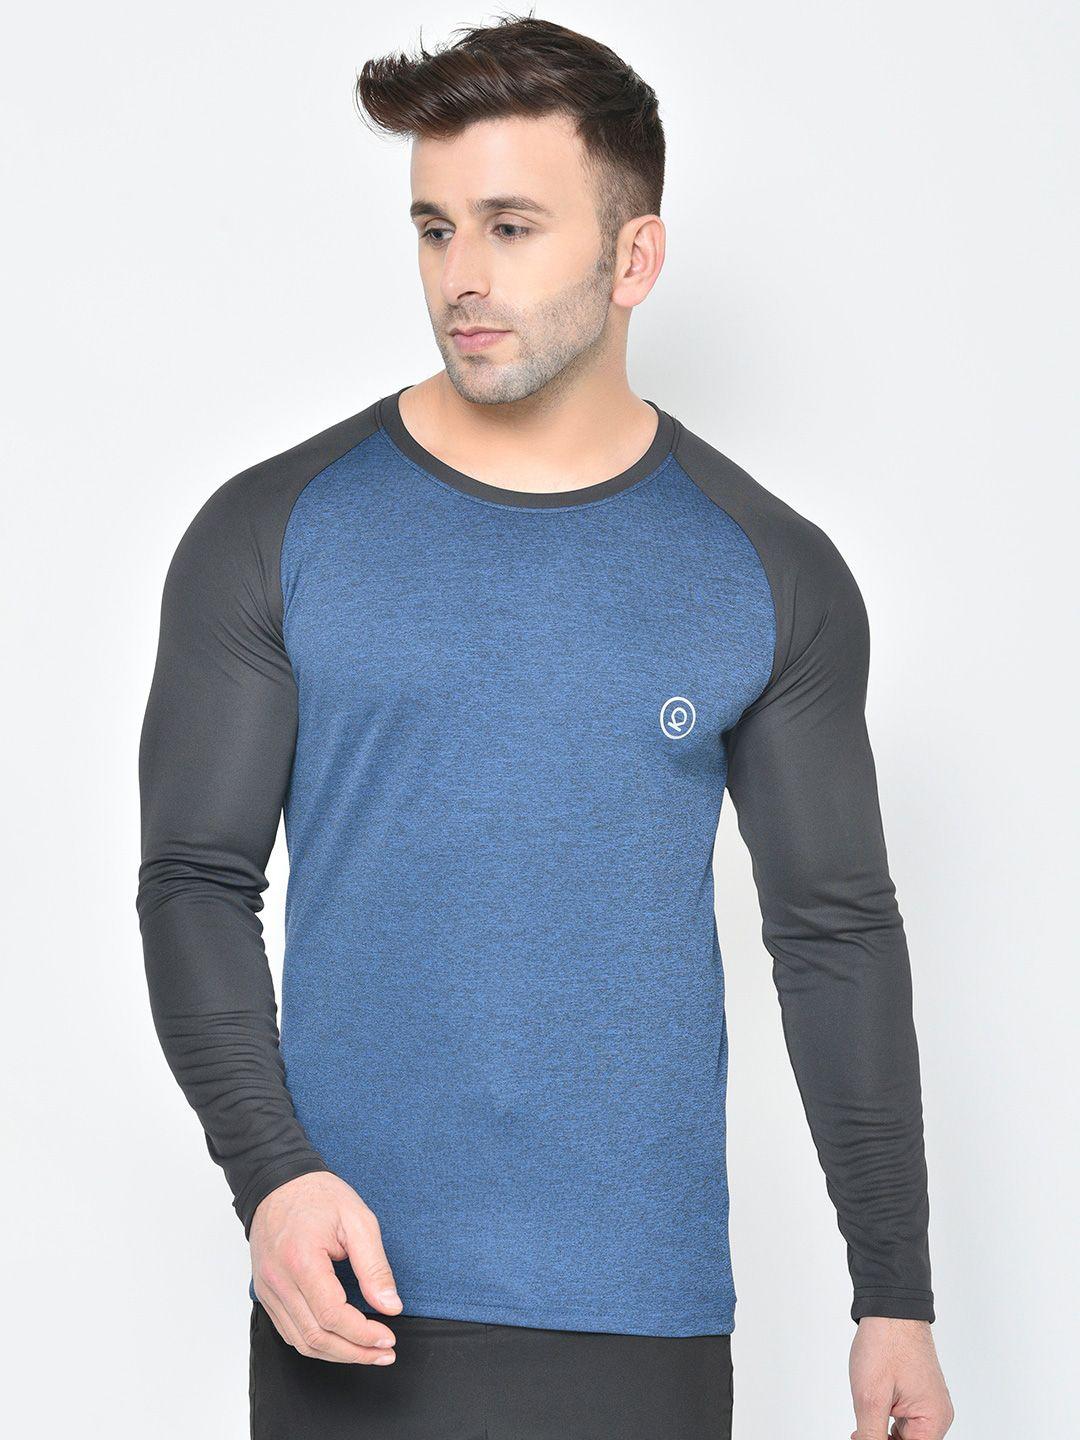 chkokko men raglan sleeves dri-fit training or gym slim fit t-shirt